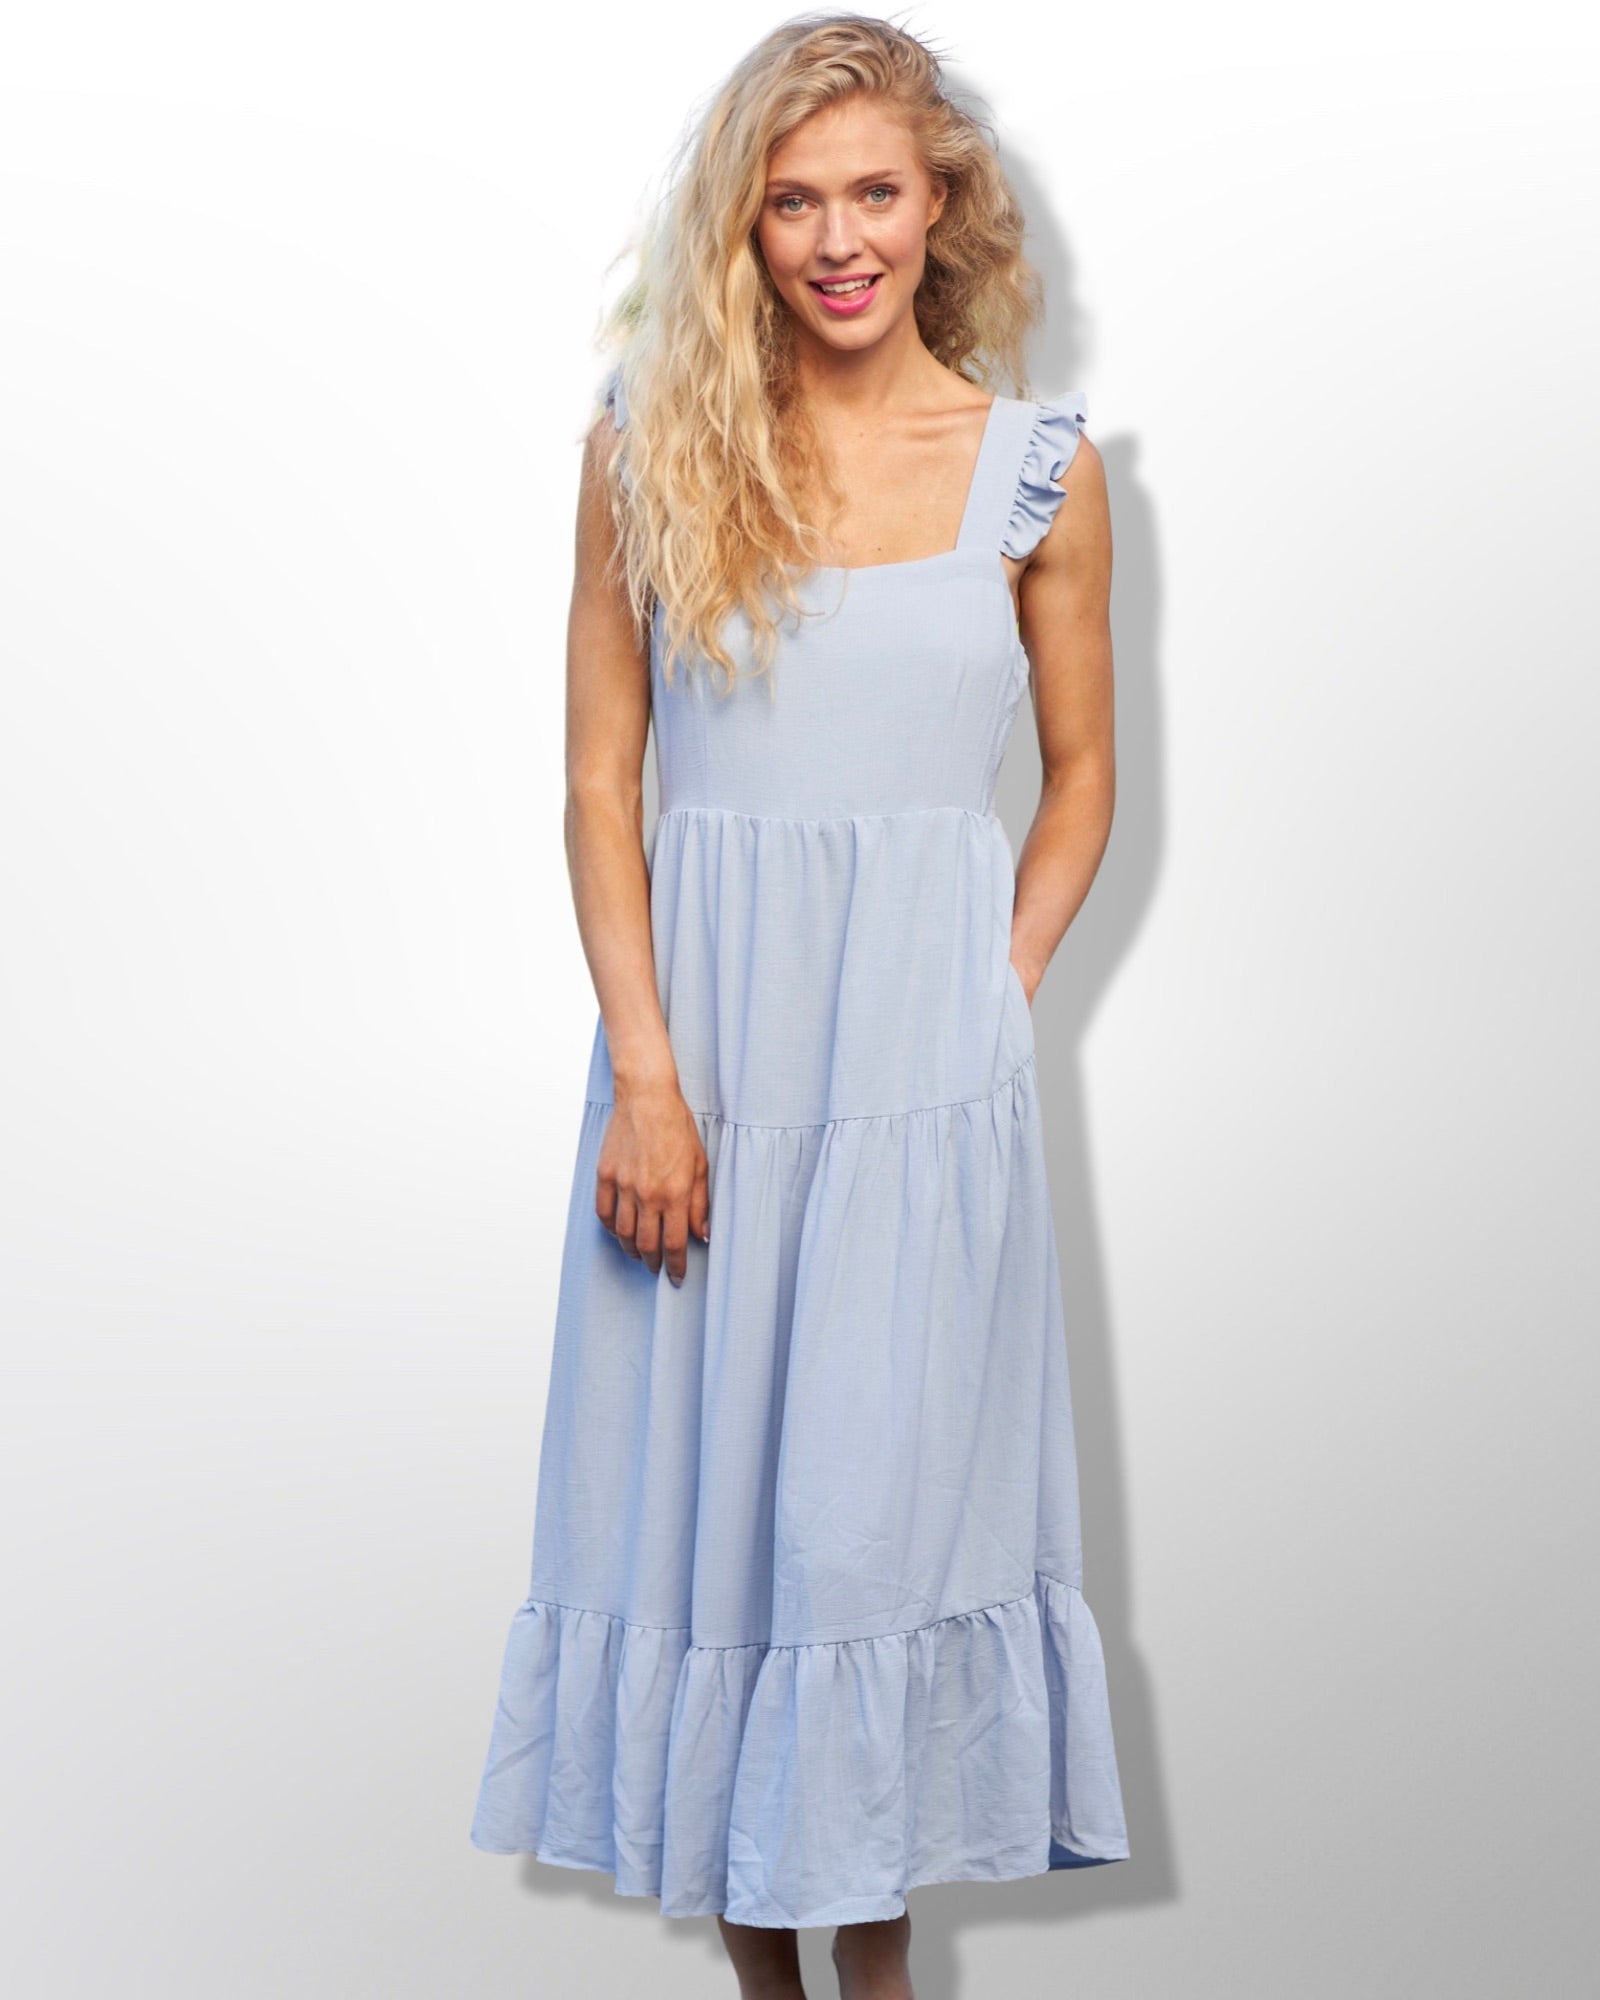 Sleeveless Maxi Dress for Women in Light Blue Color